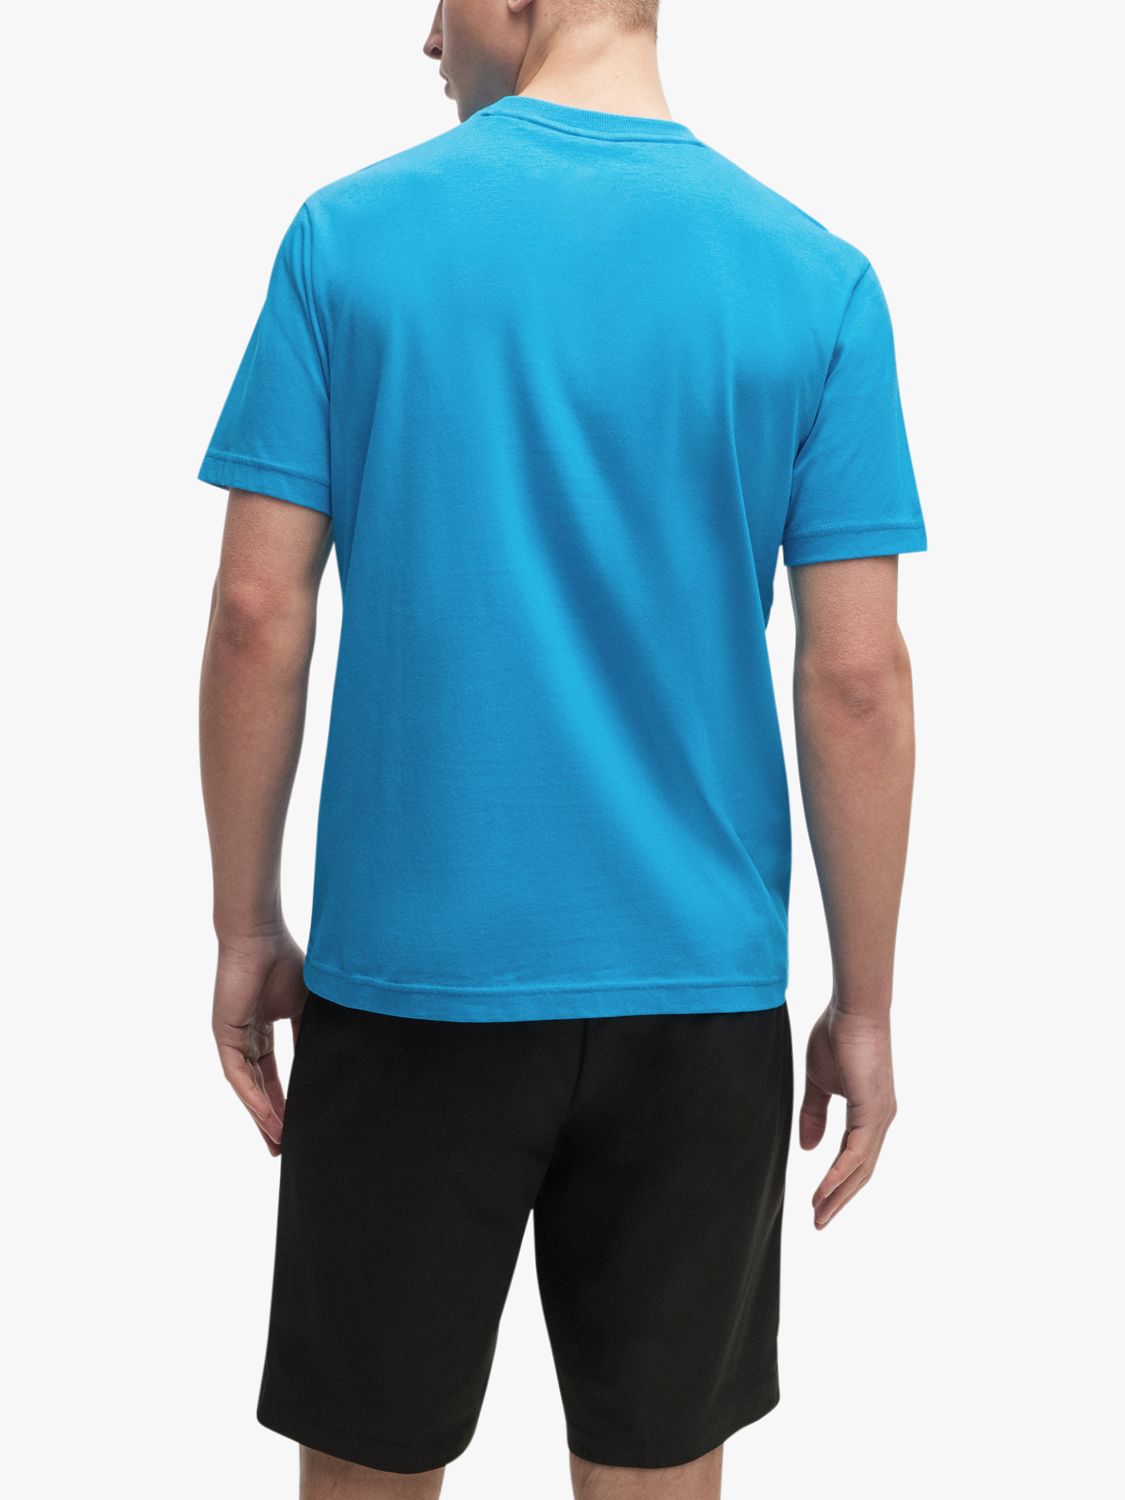 BOSS Flag Artwork Cotton T-Shirt, Turquoise, XL